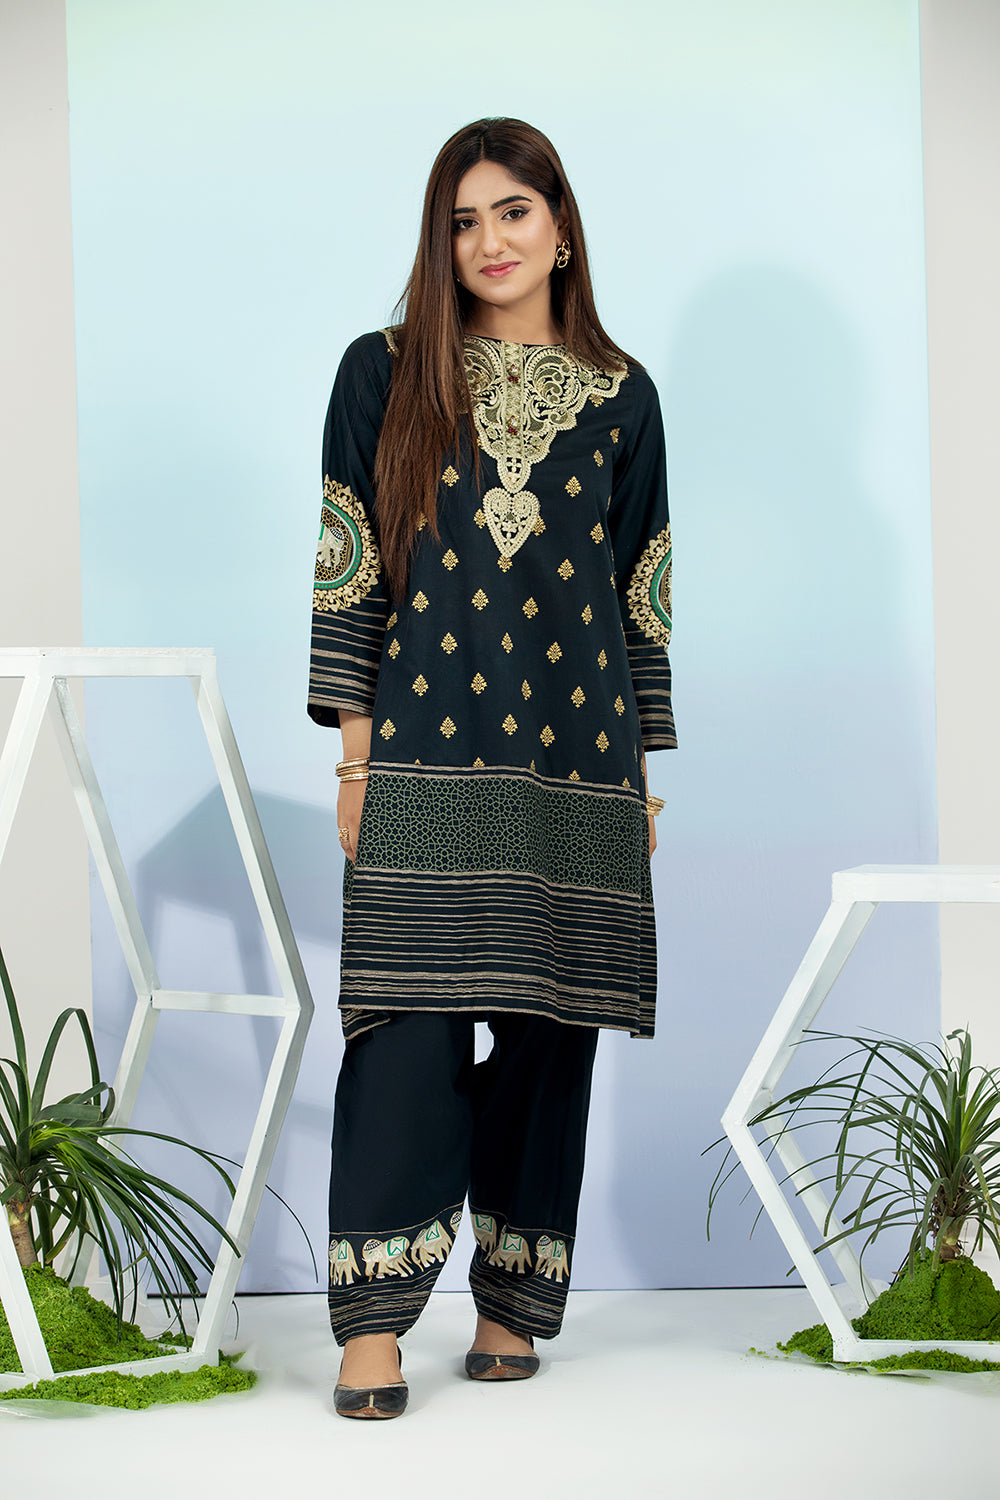 Eid Dress Design For Girls Eid New Dress Collection 2021 Stylish Eid Dress  Design For Eid 2021 | Eid Dress Design For Girls Eid New Dress Collection  2021 Stylish Eid Dress Design